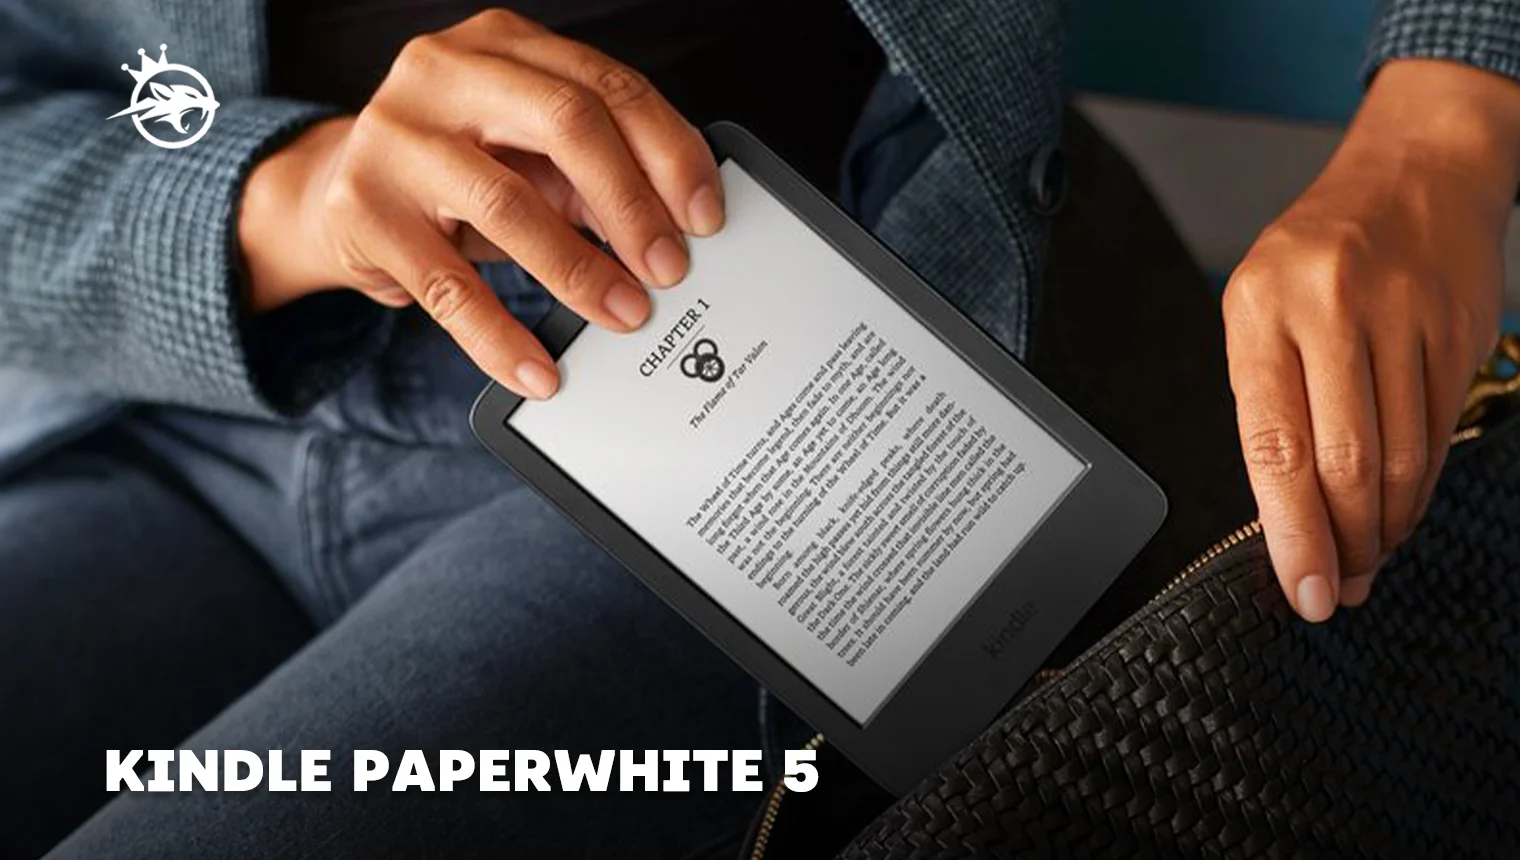 Kindle paperwhite 5